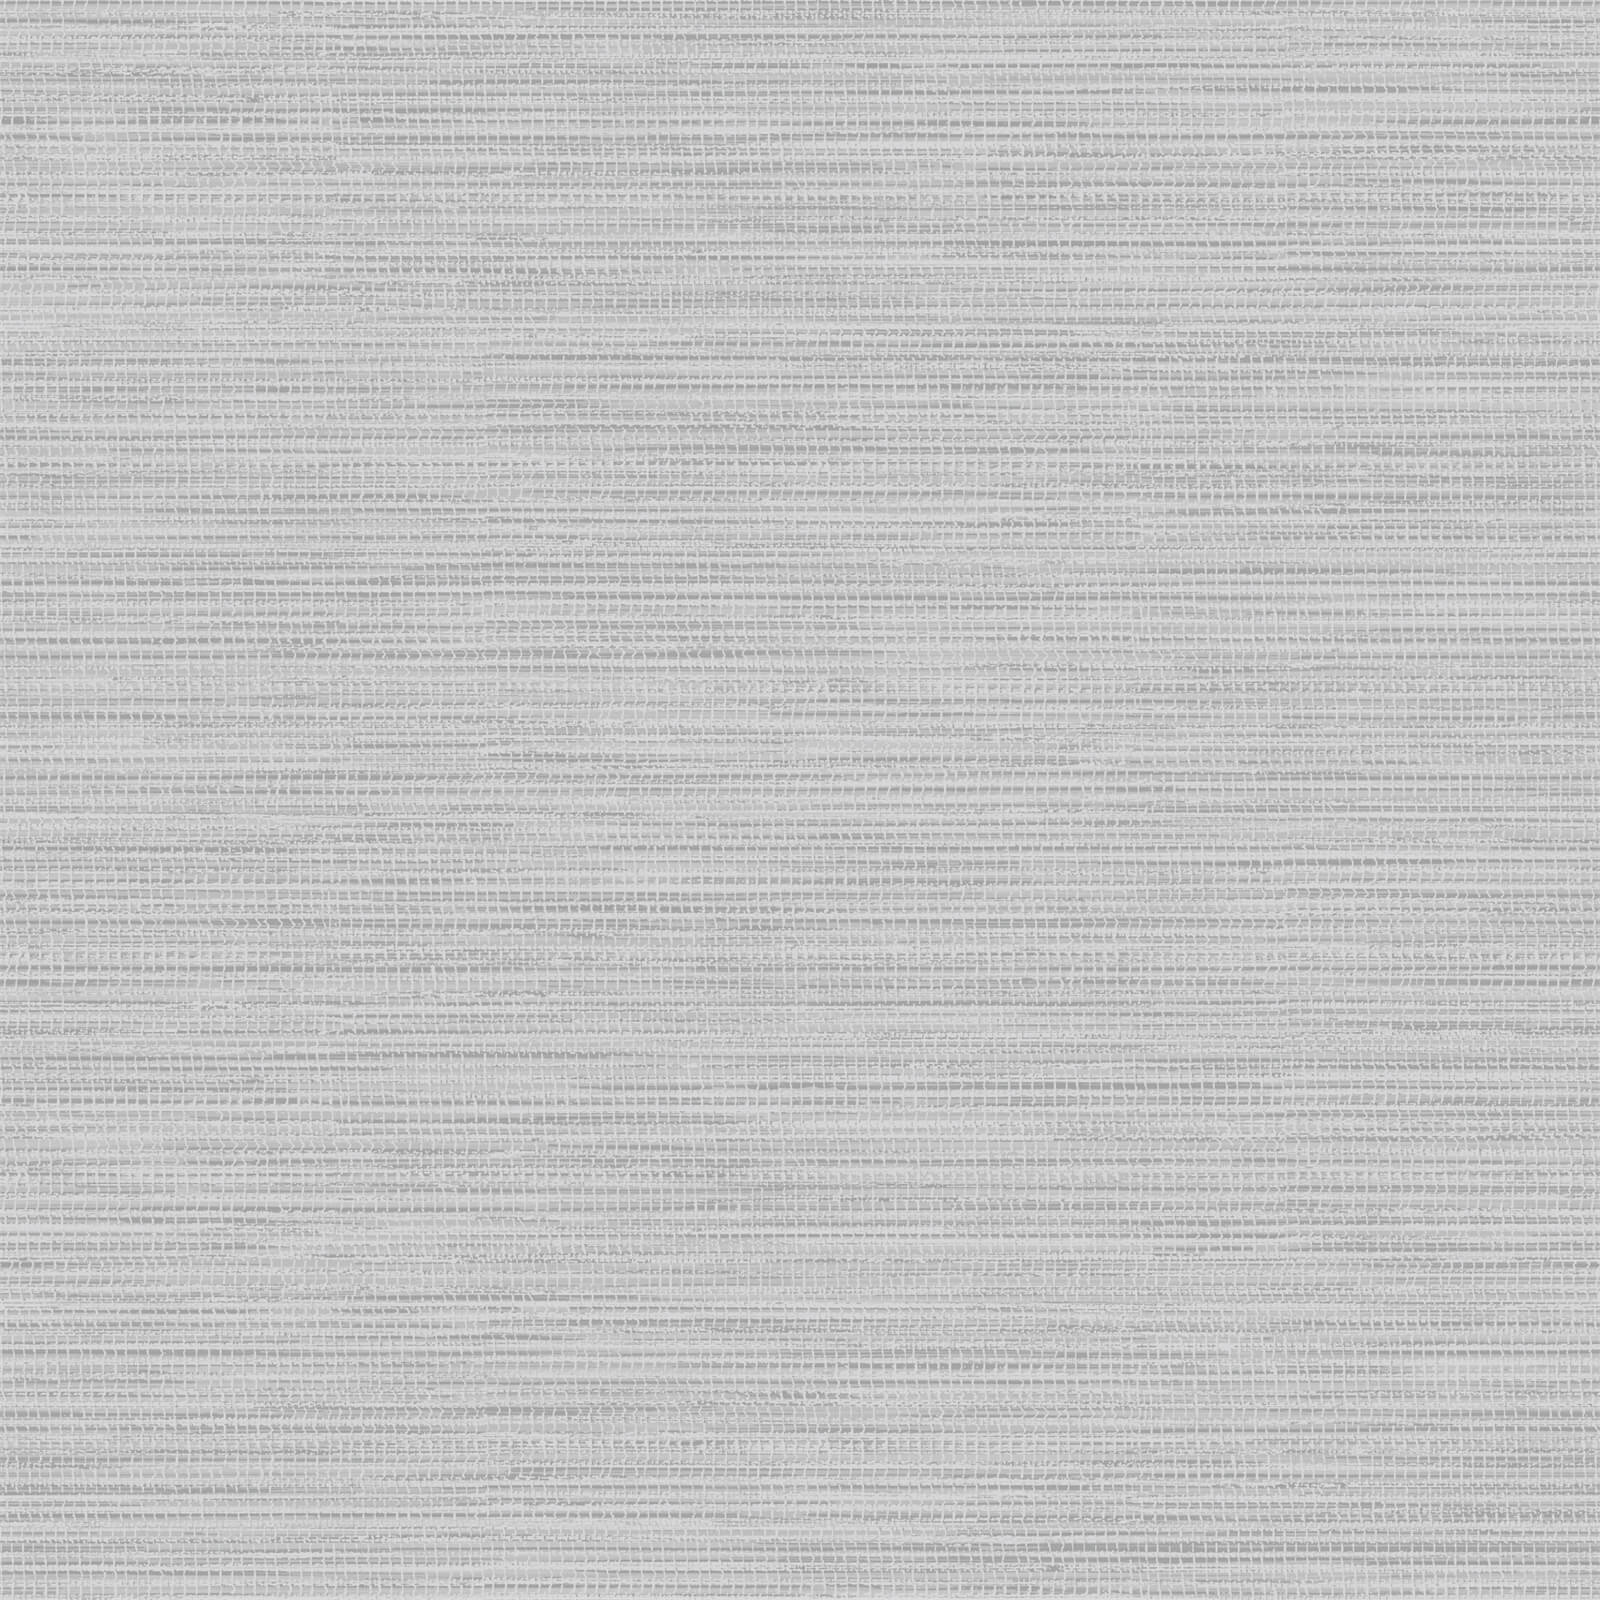 Holden Decor Bambara Plain Textured Metallic Grey Wallpaper